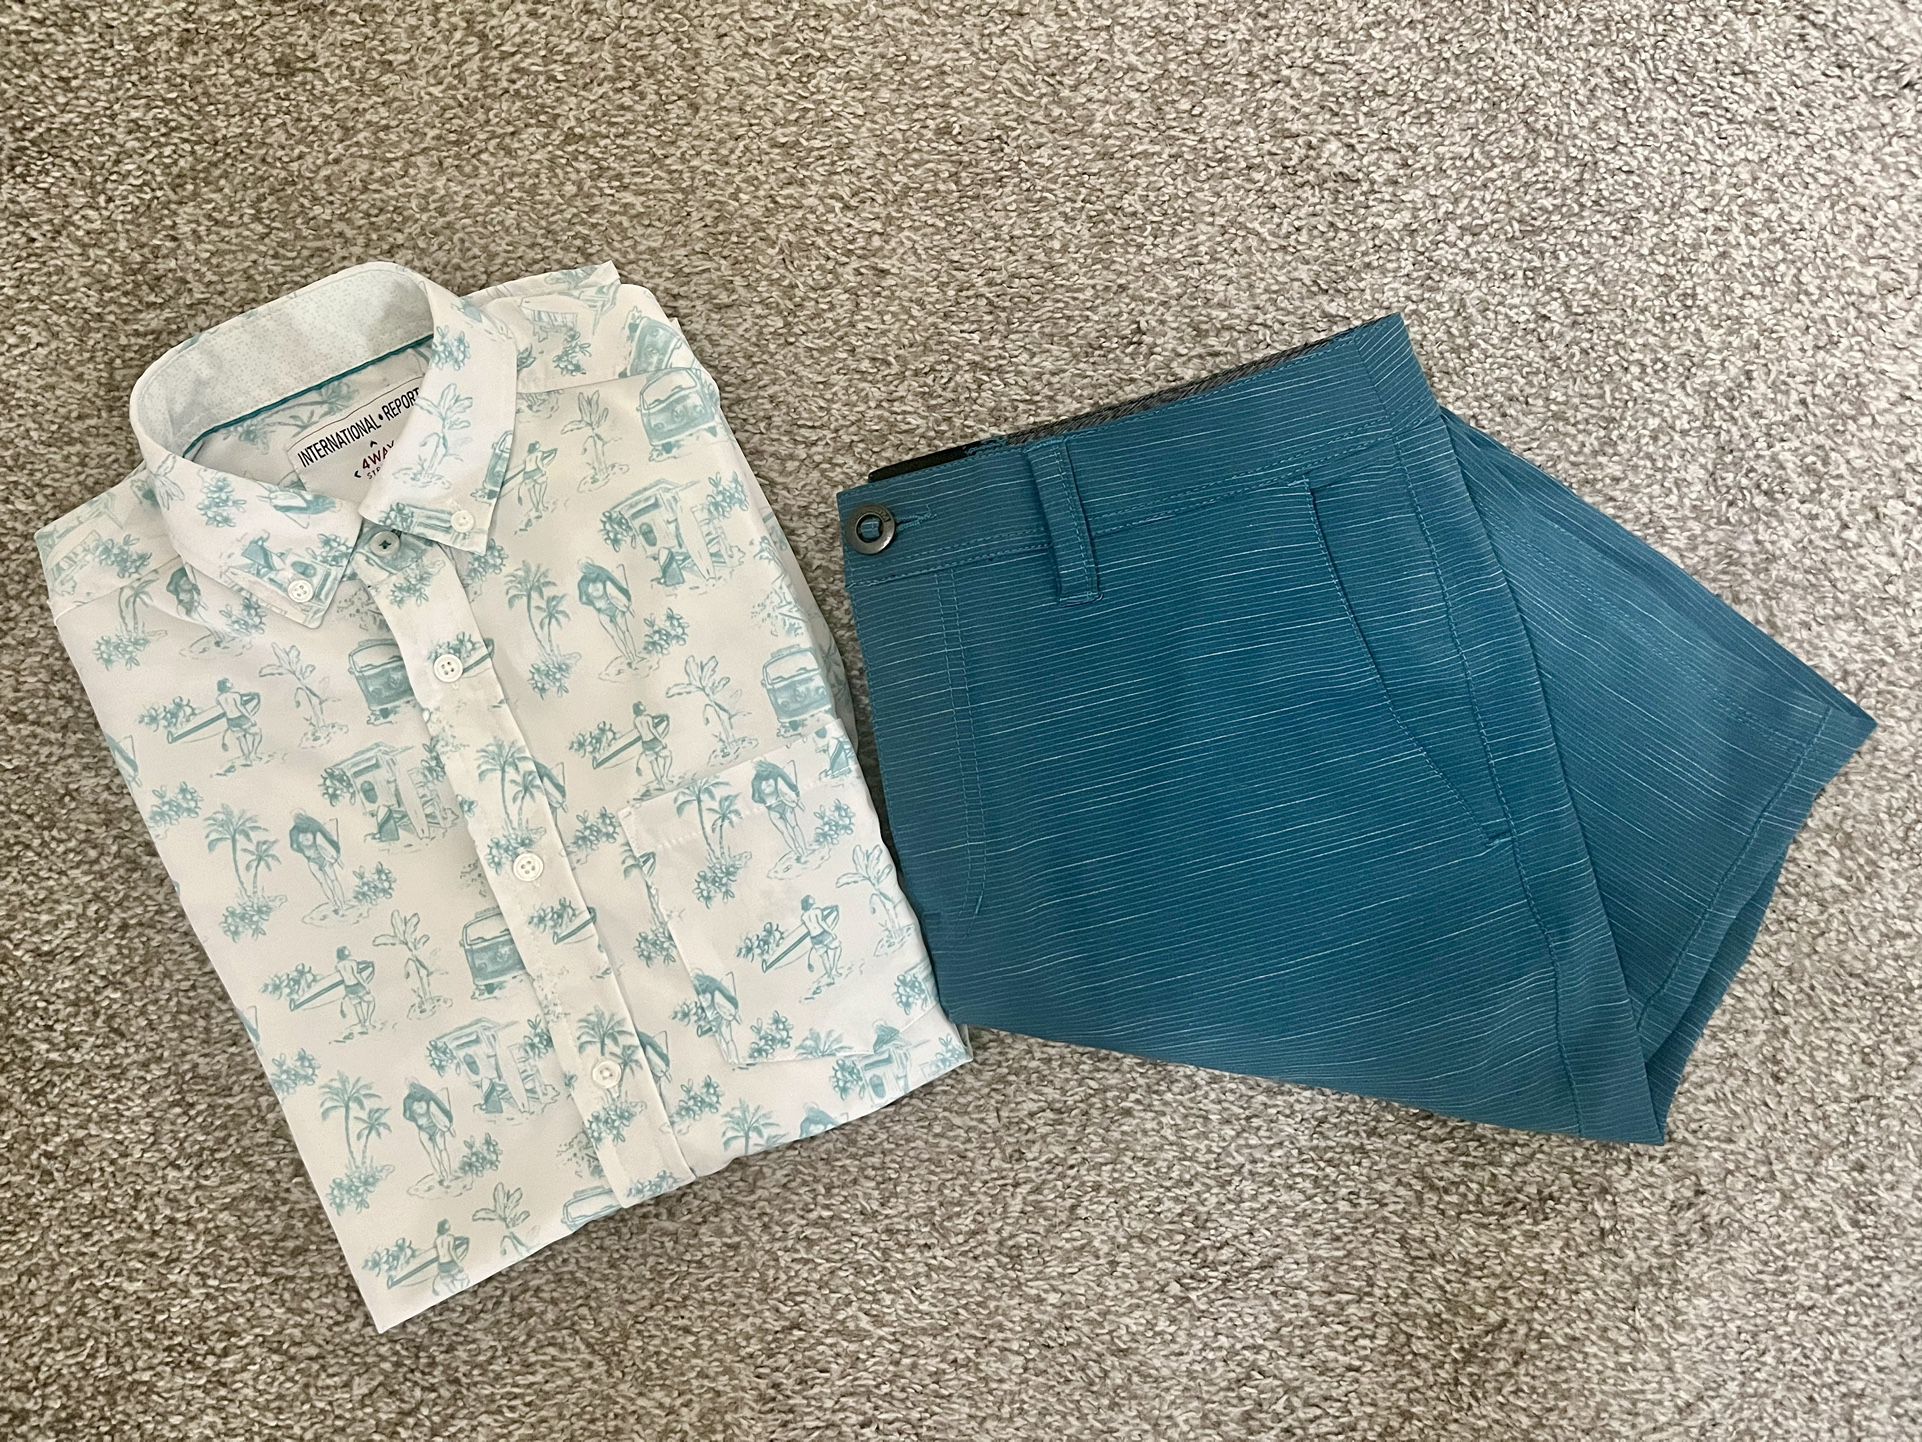 Men’s Volcom Shorts & Shirt Set